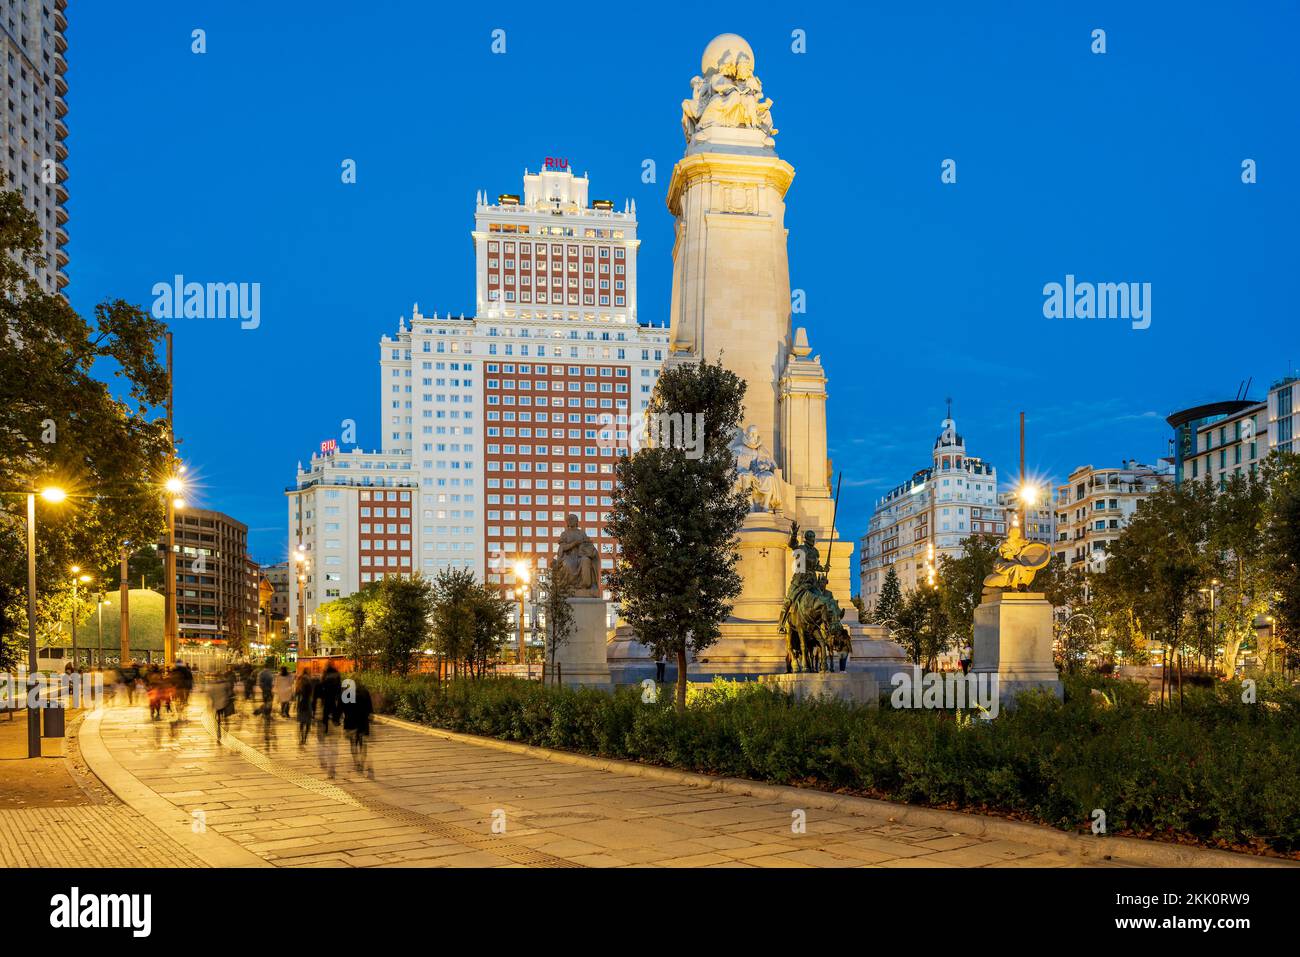 Night view of Plaza de Espana, Madrid, Spain Stock Photo